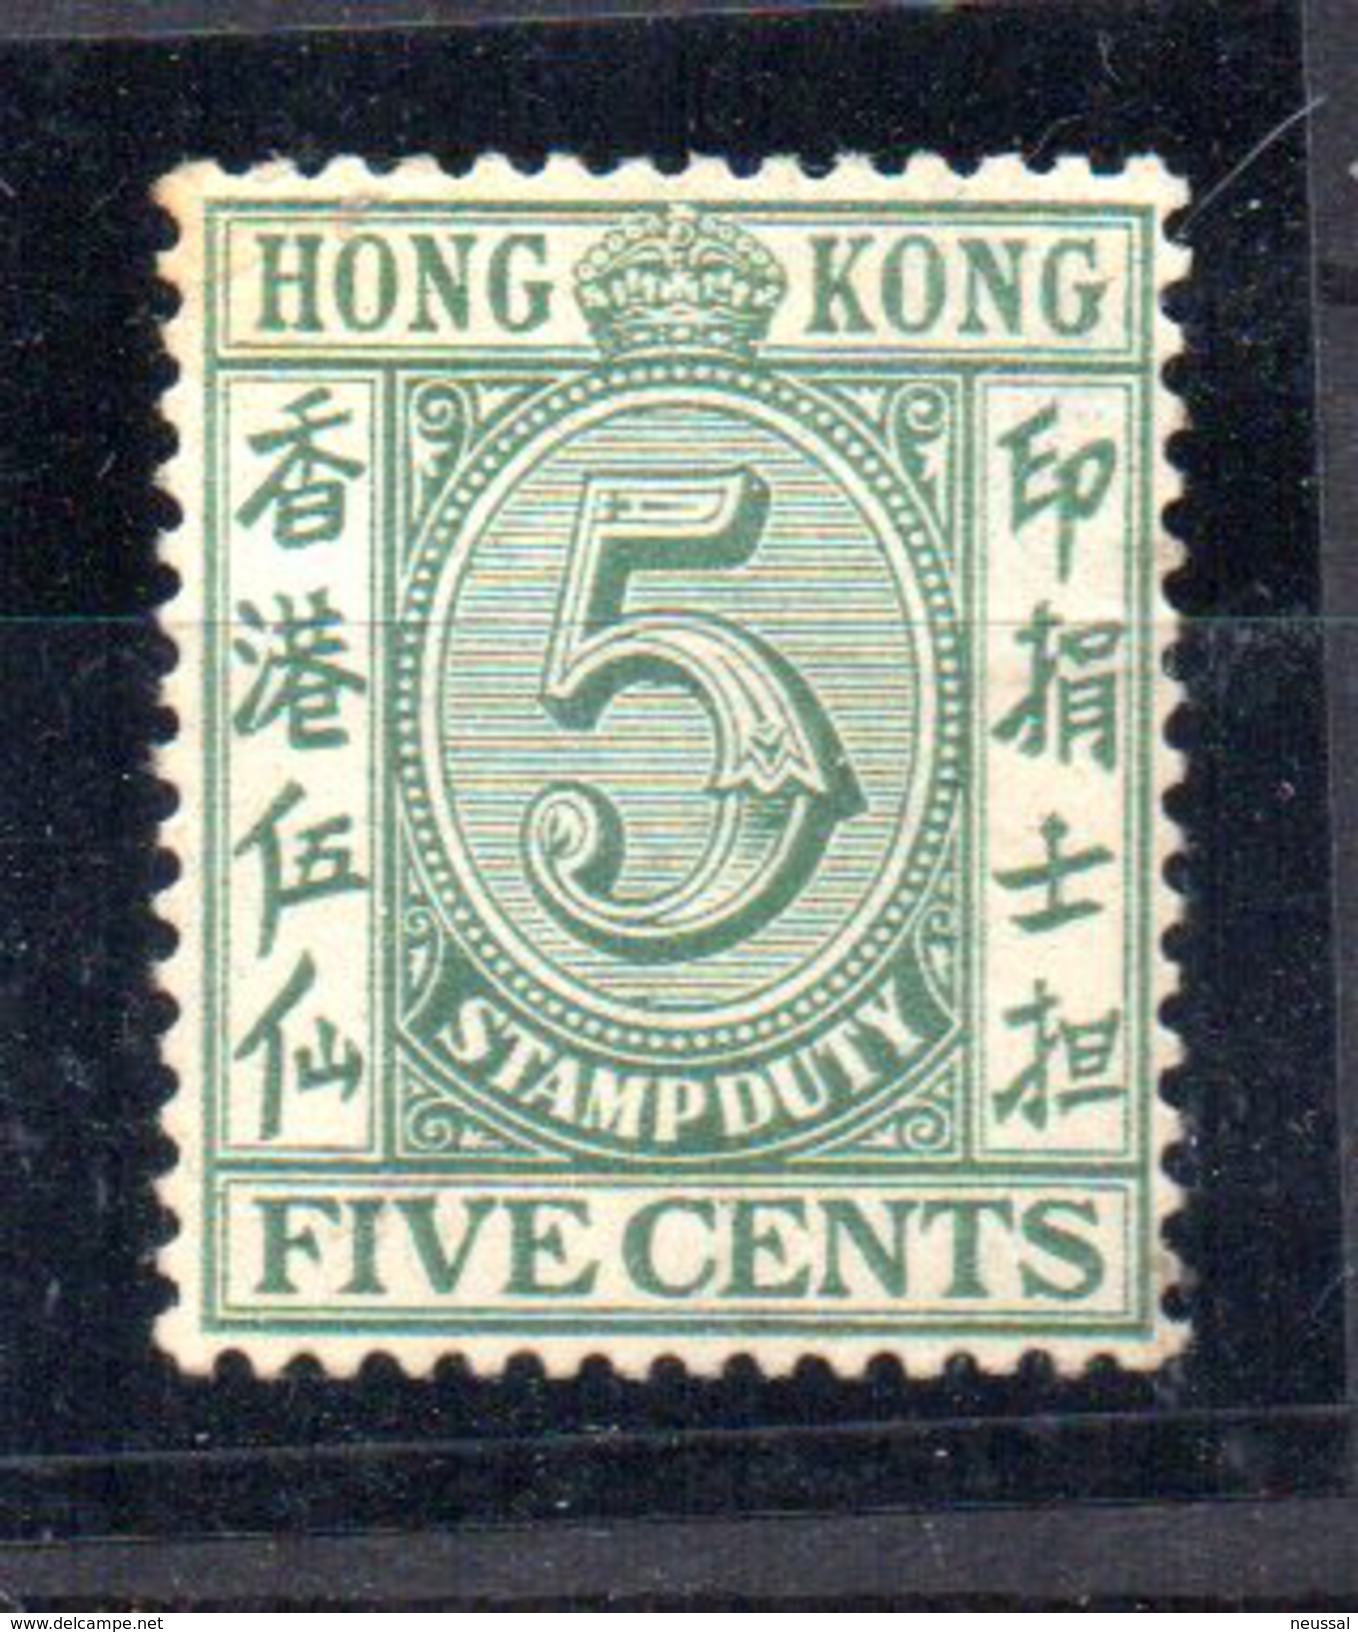 Sello Franquicia Postal Nº 15 Hong Kong. - Francobollo Fiscali Postali